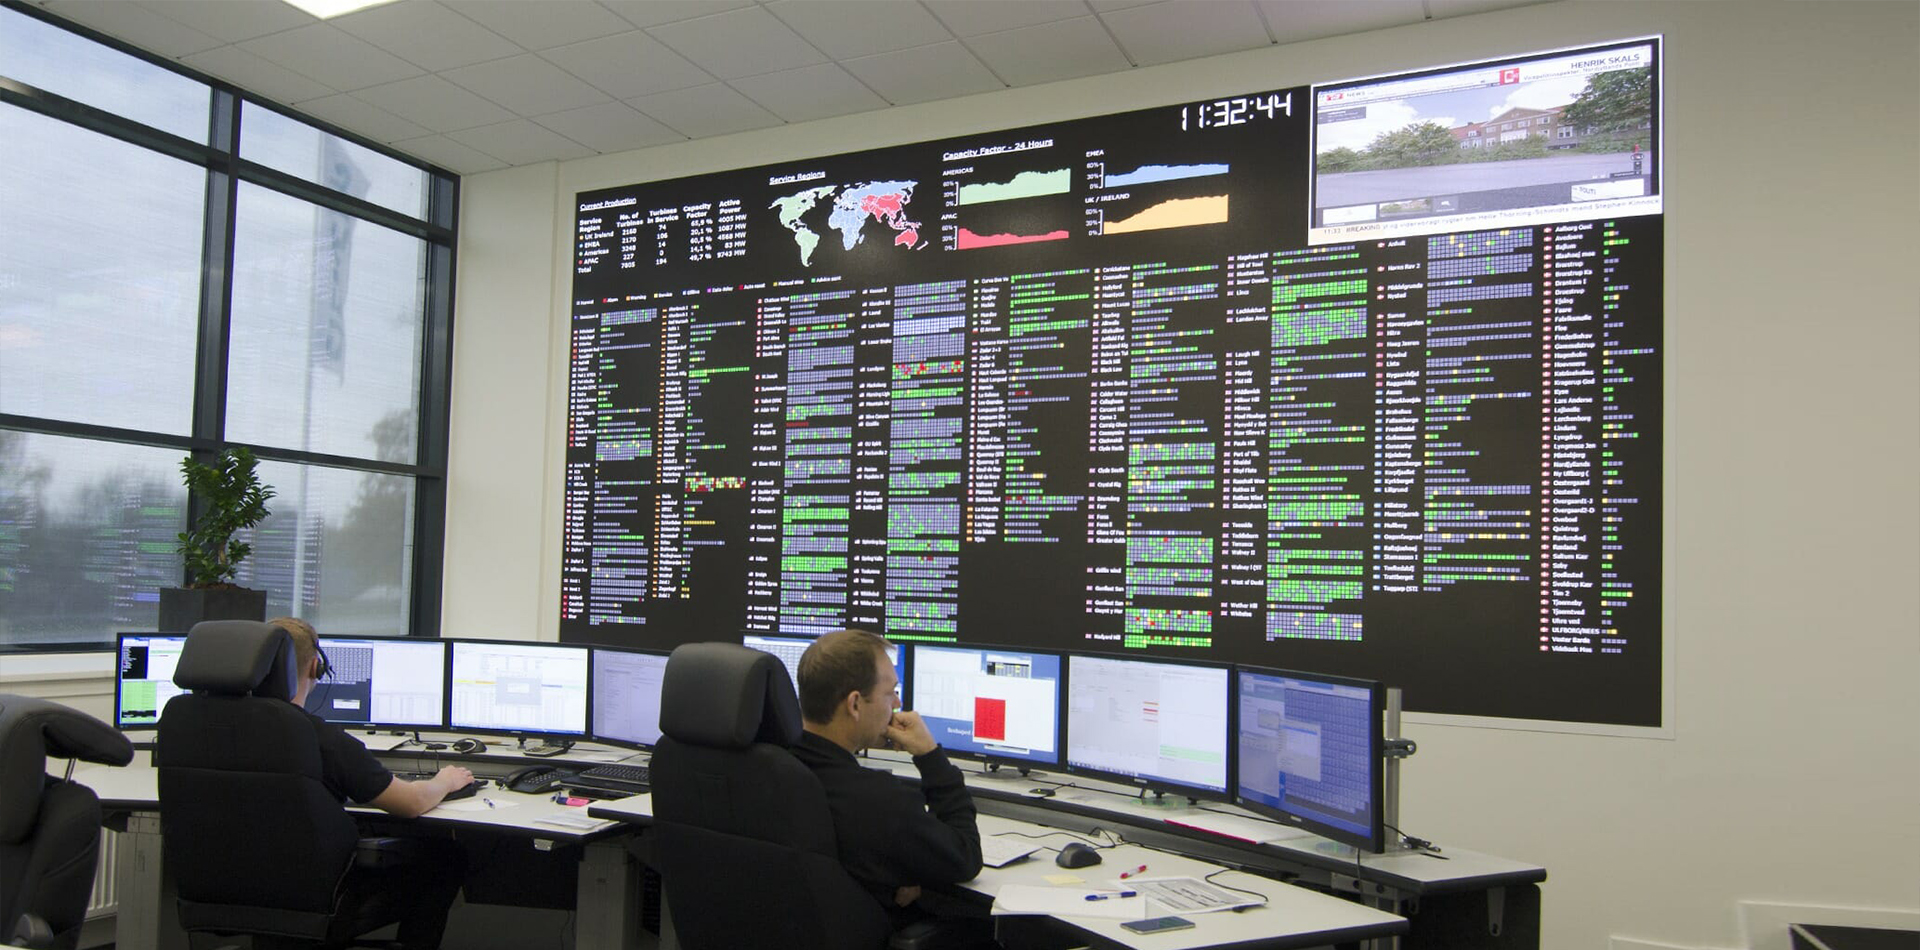 control room led display